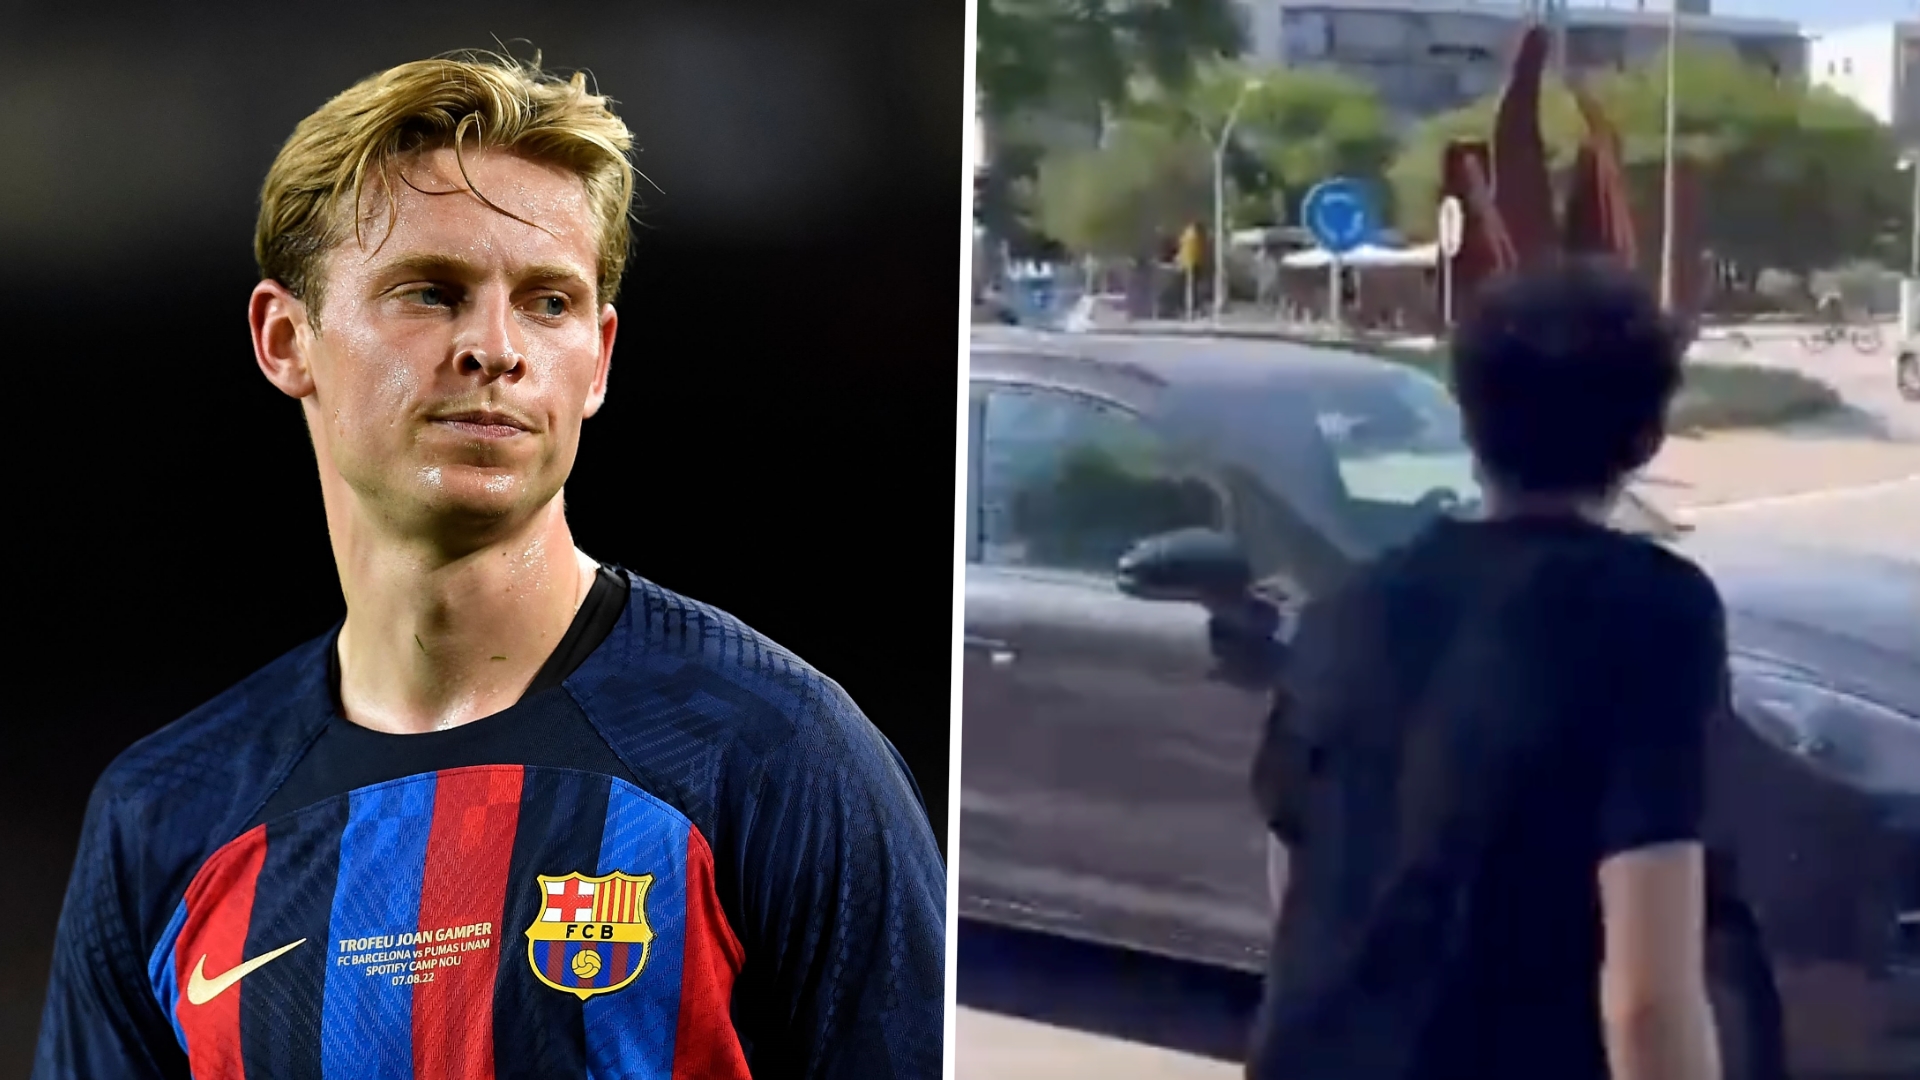 WATCH: Barcelona fans heckle De Jong over salary as midfielder arrives at training